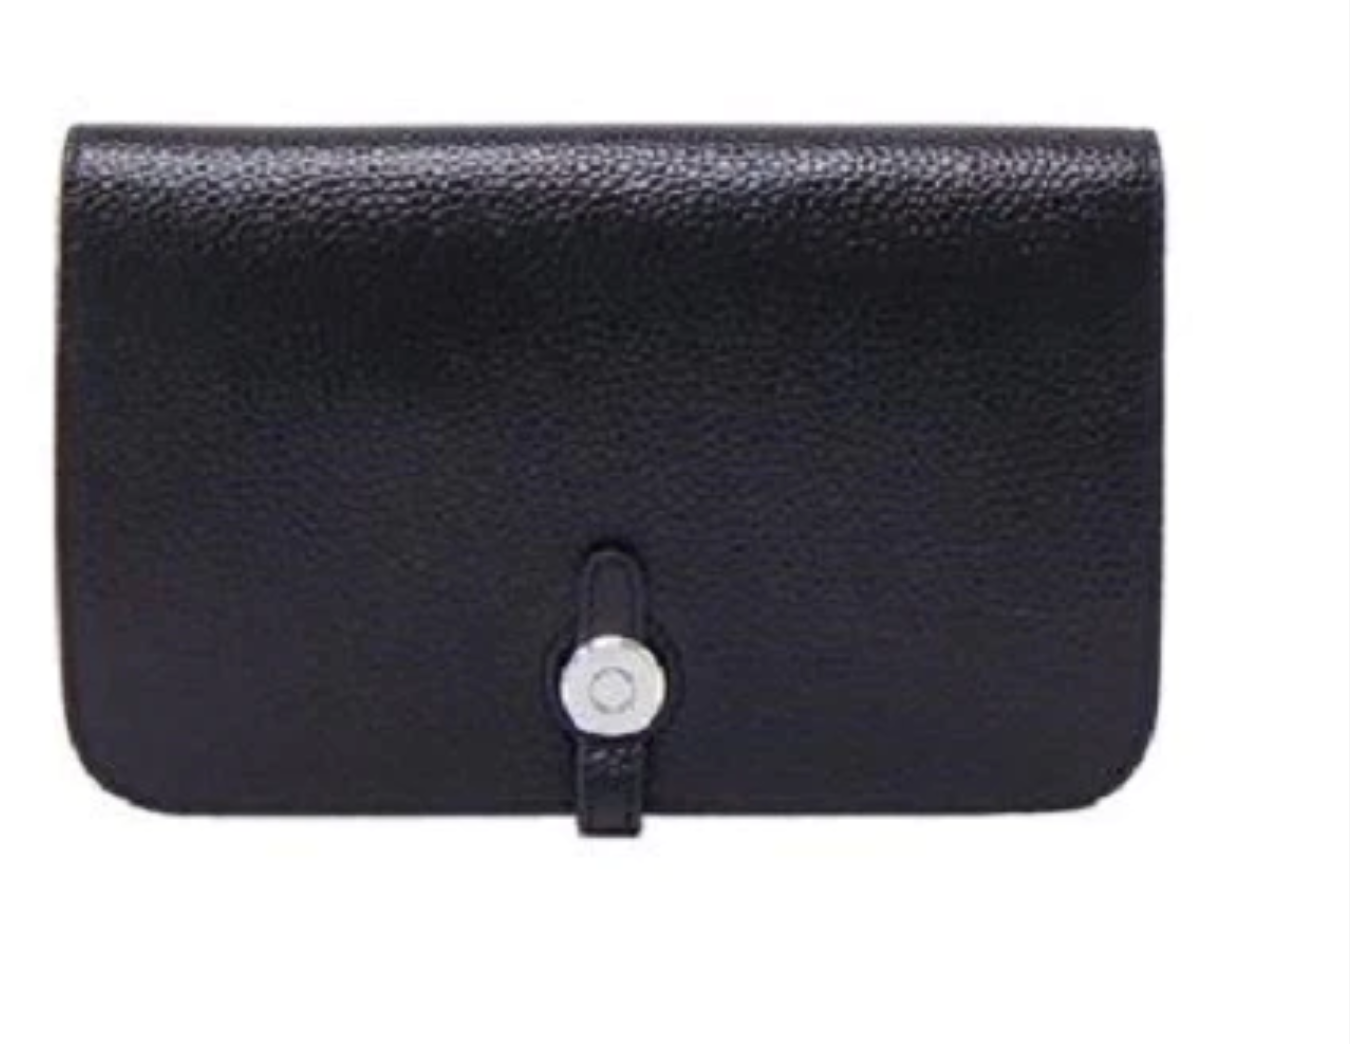 Authentic Hermes Black/Brown Bi-Color Togo Leather Dogon Wallet